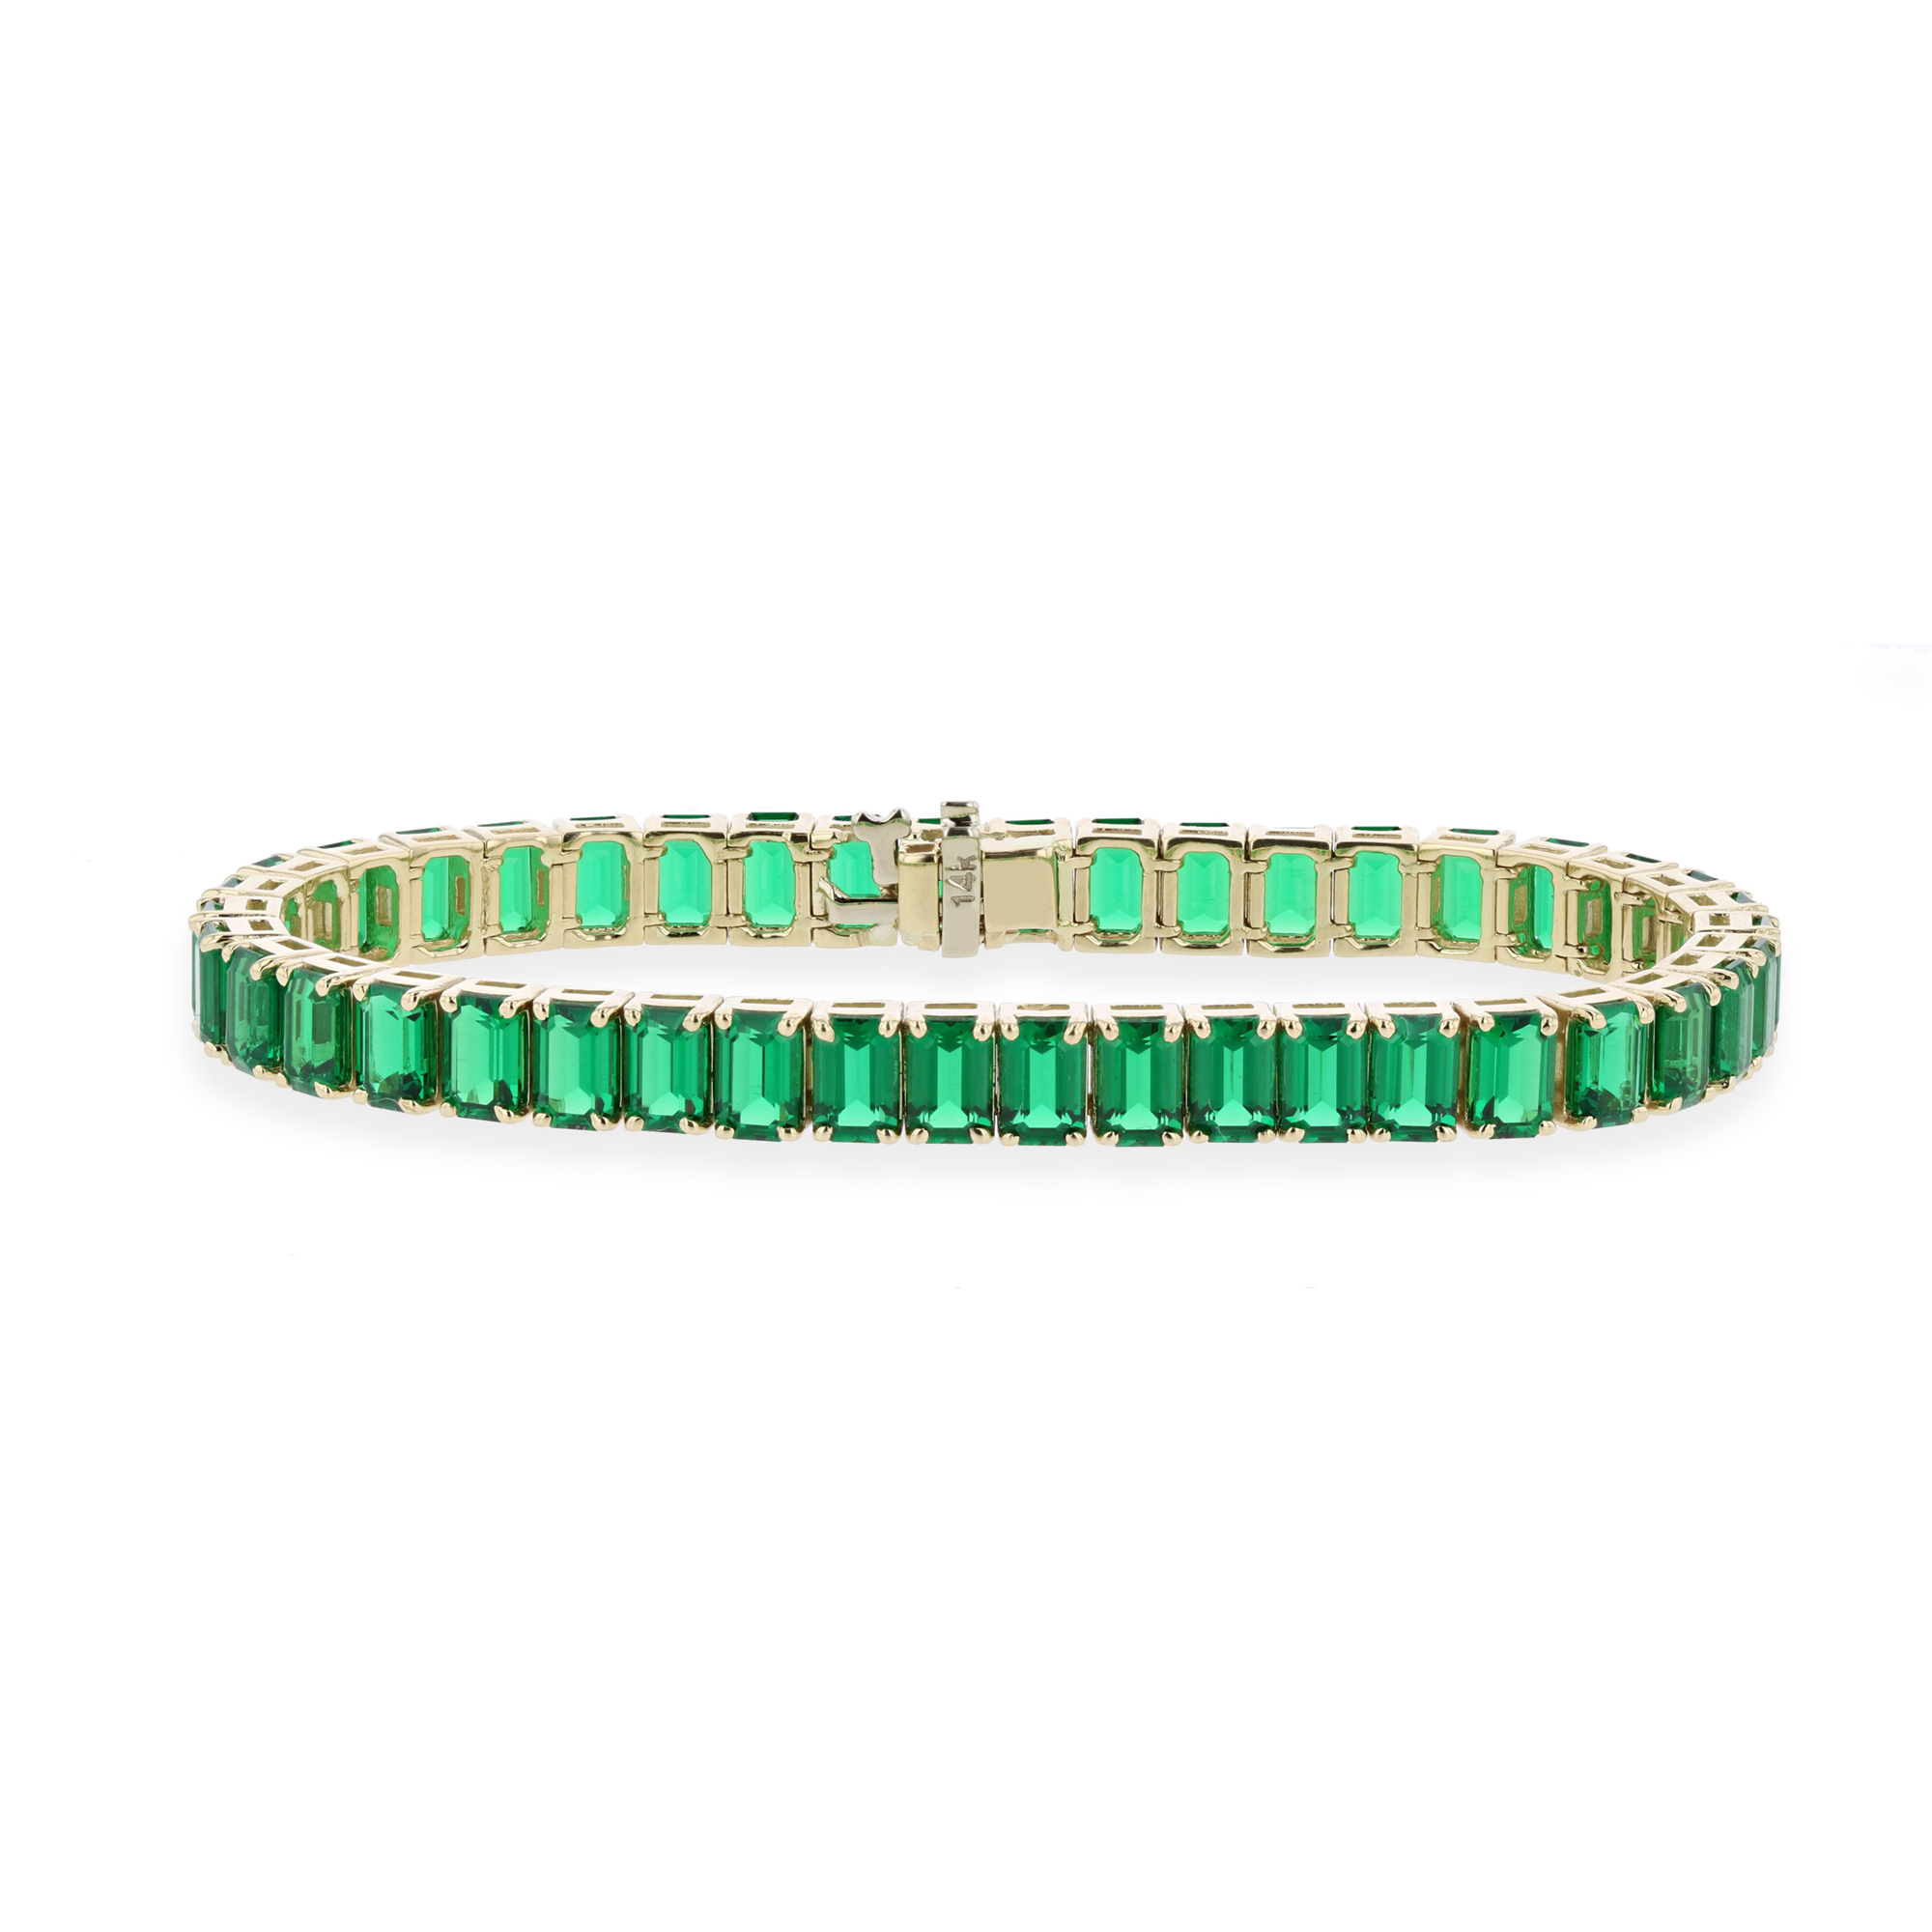 20ctw Mano Crystal Emerald Cut Tennis Bracelet in 14k Gold